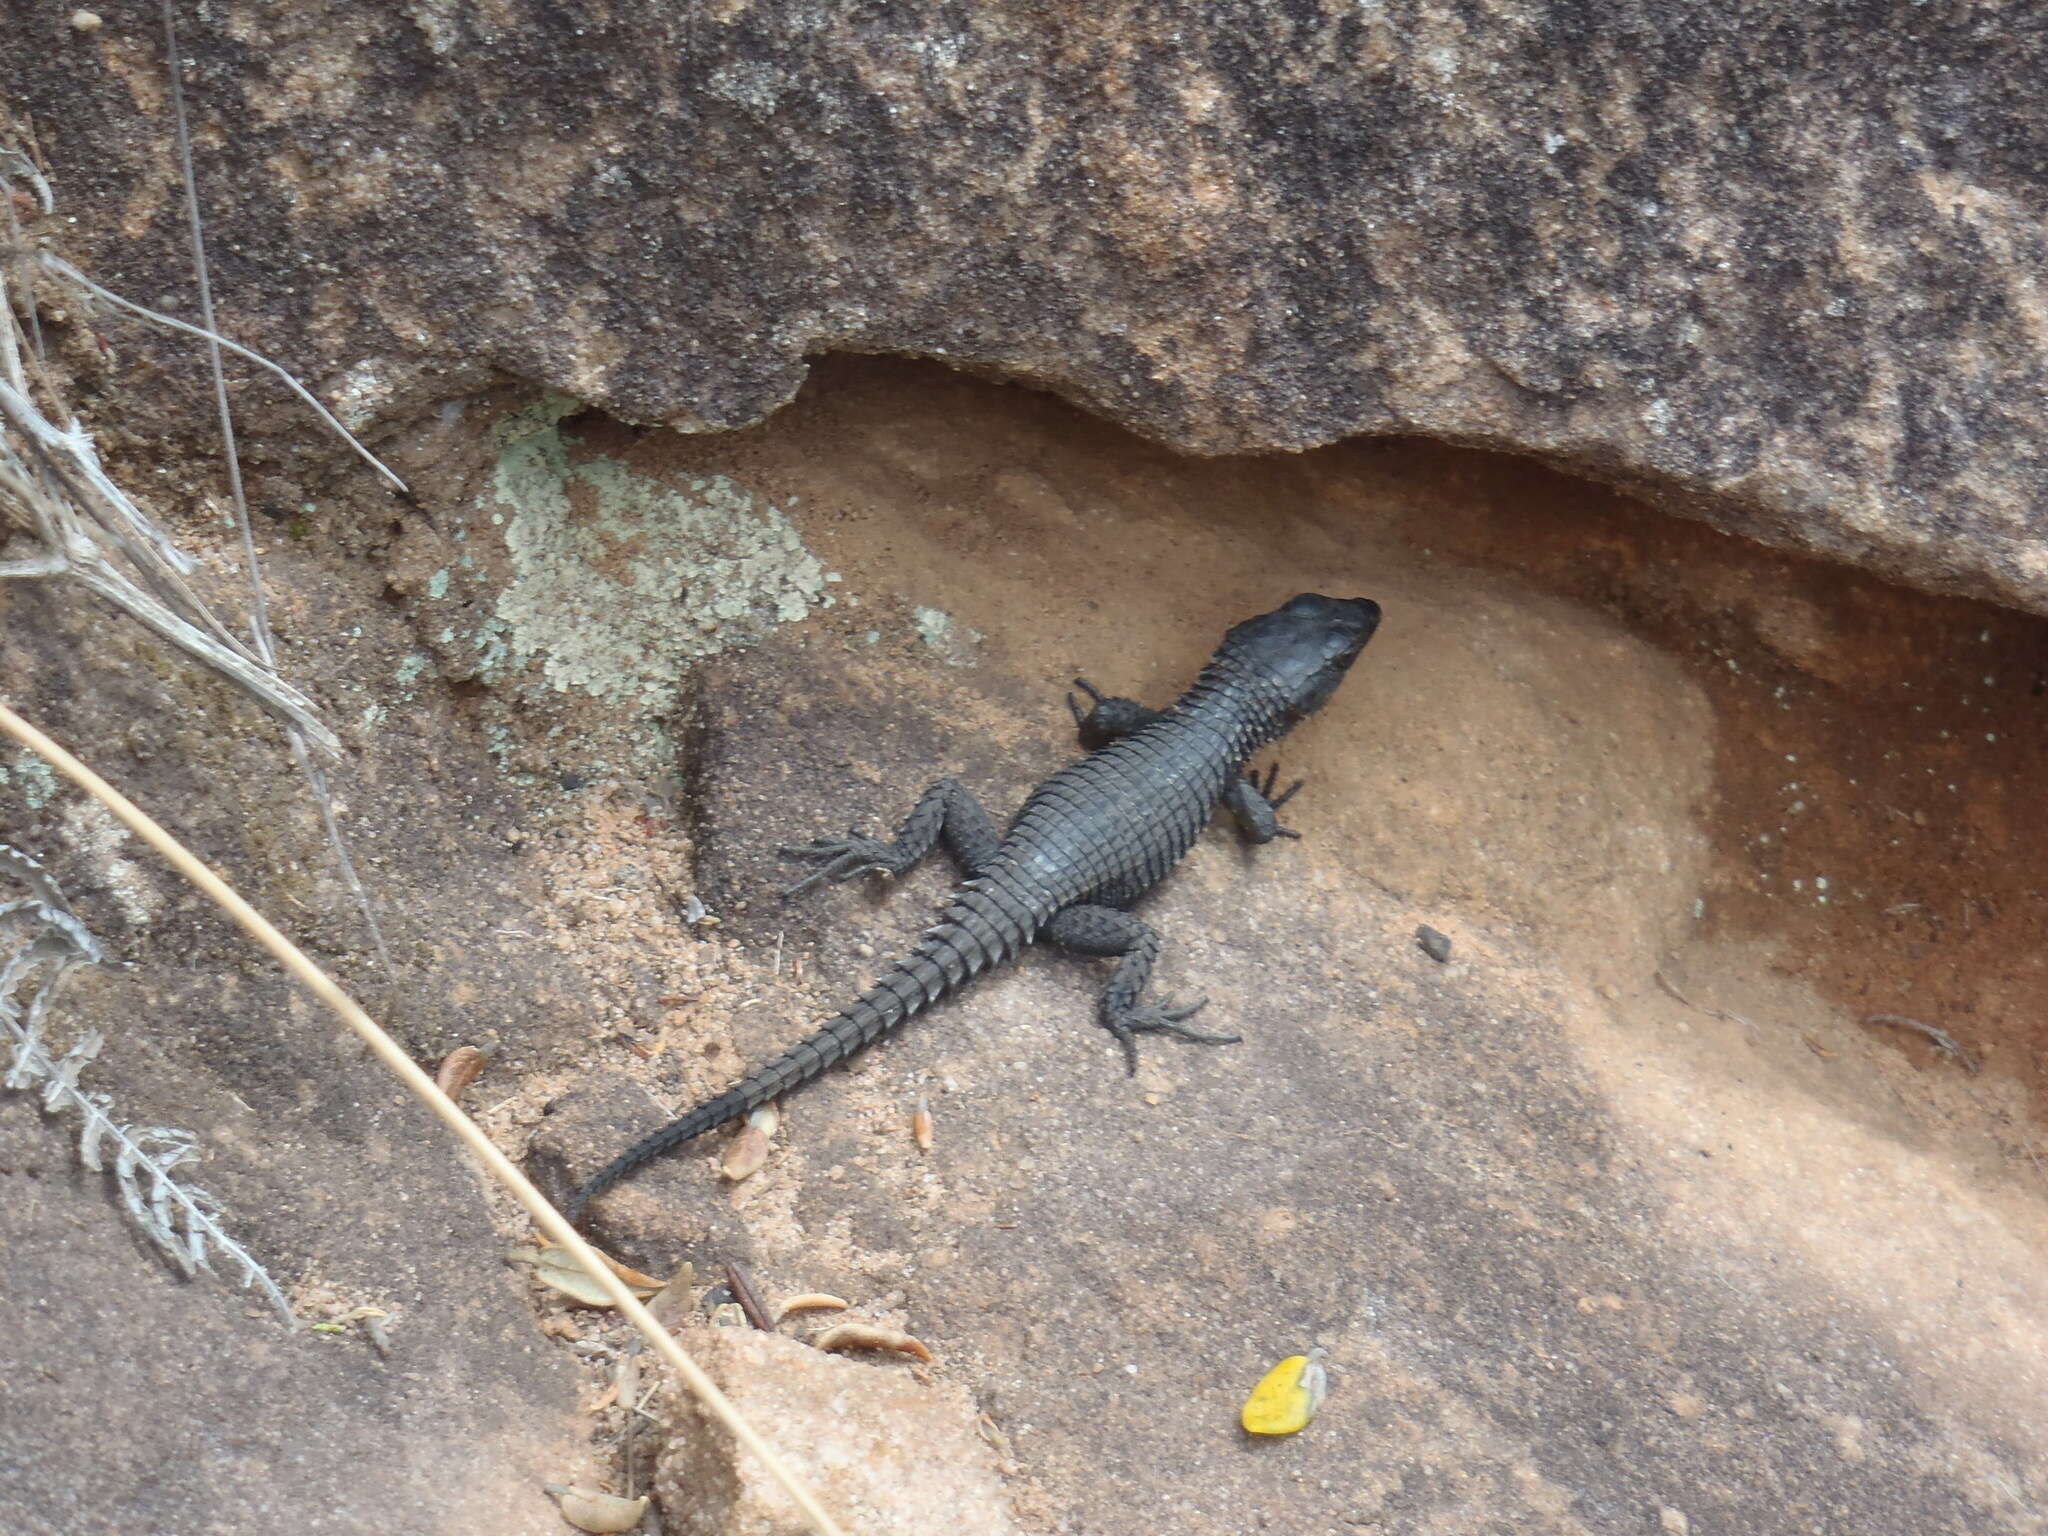 Image of Black girdled lizard